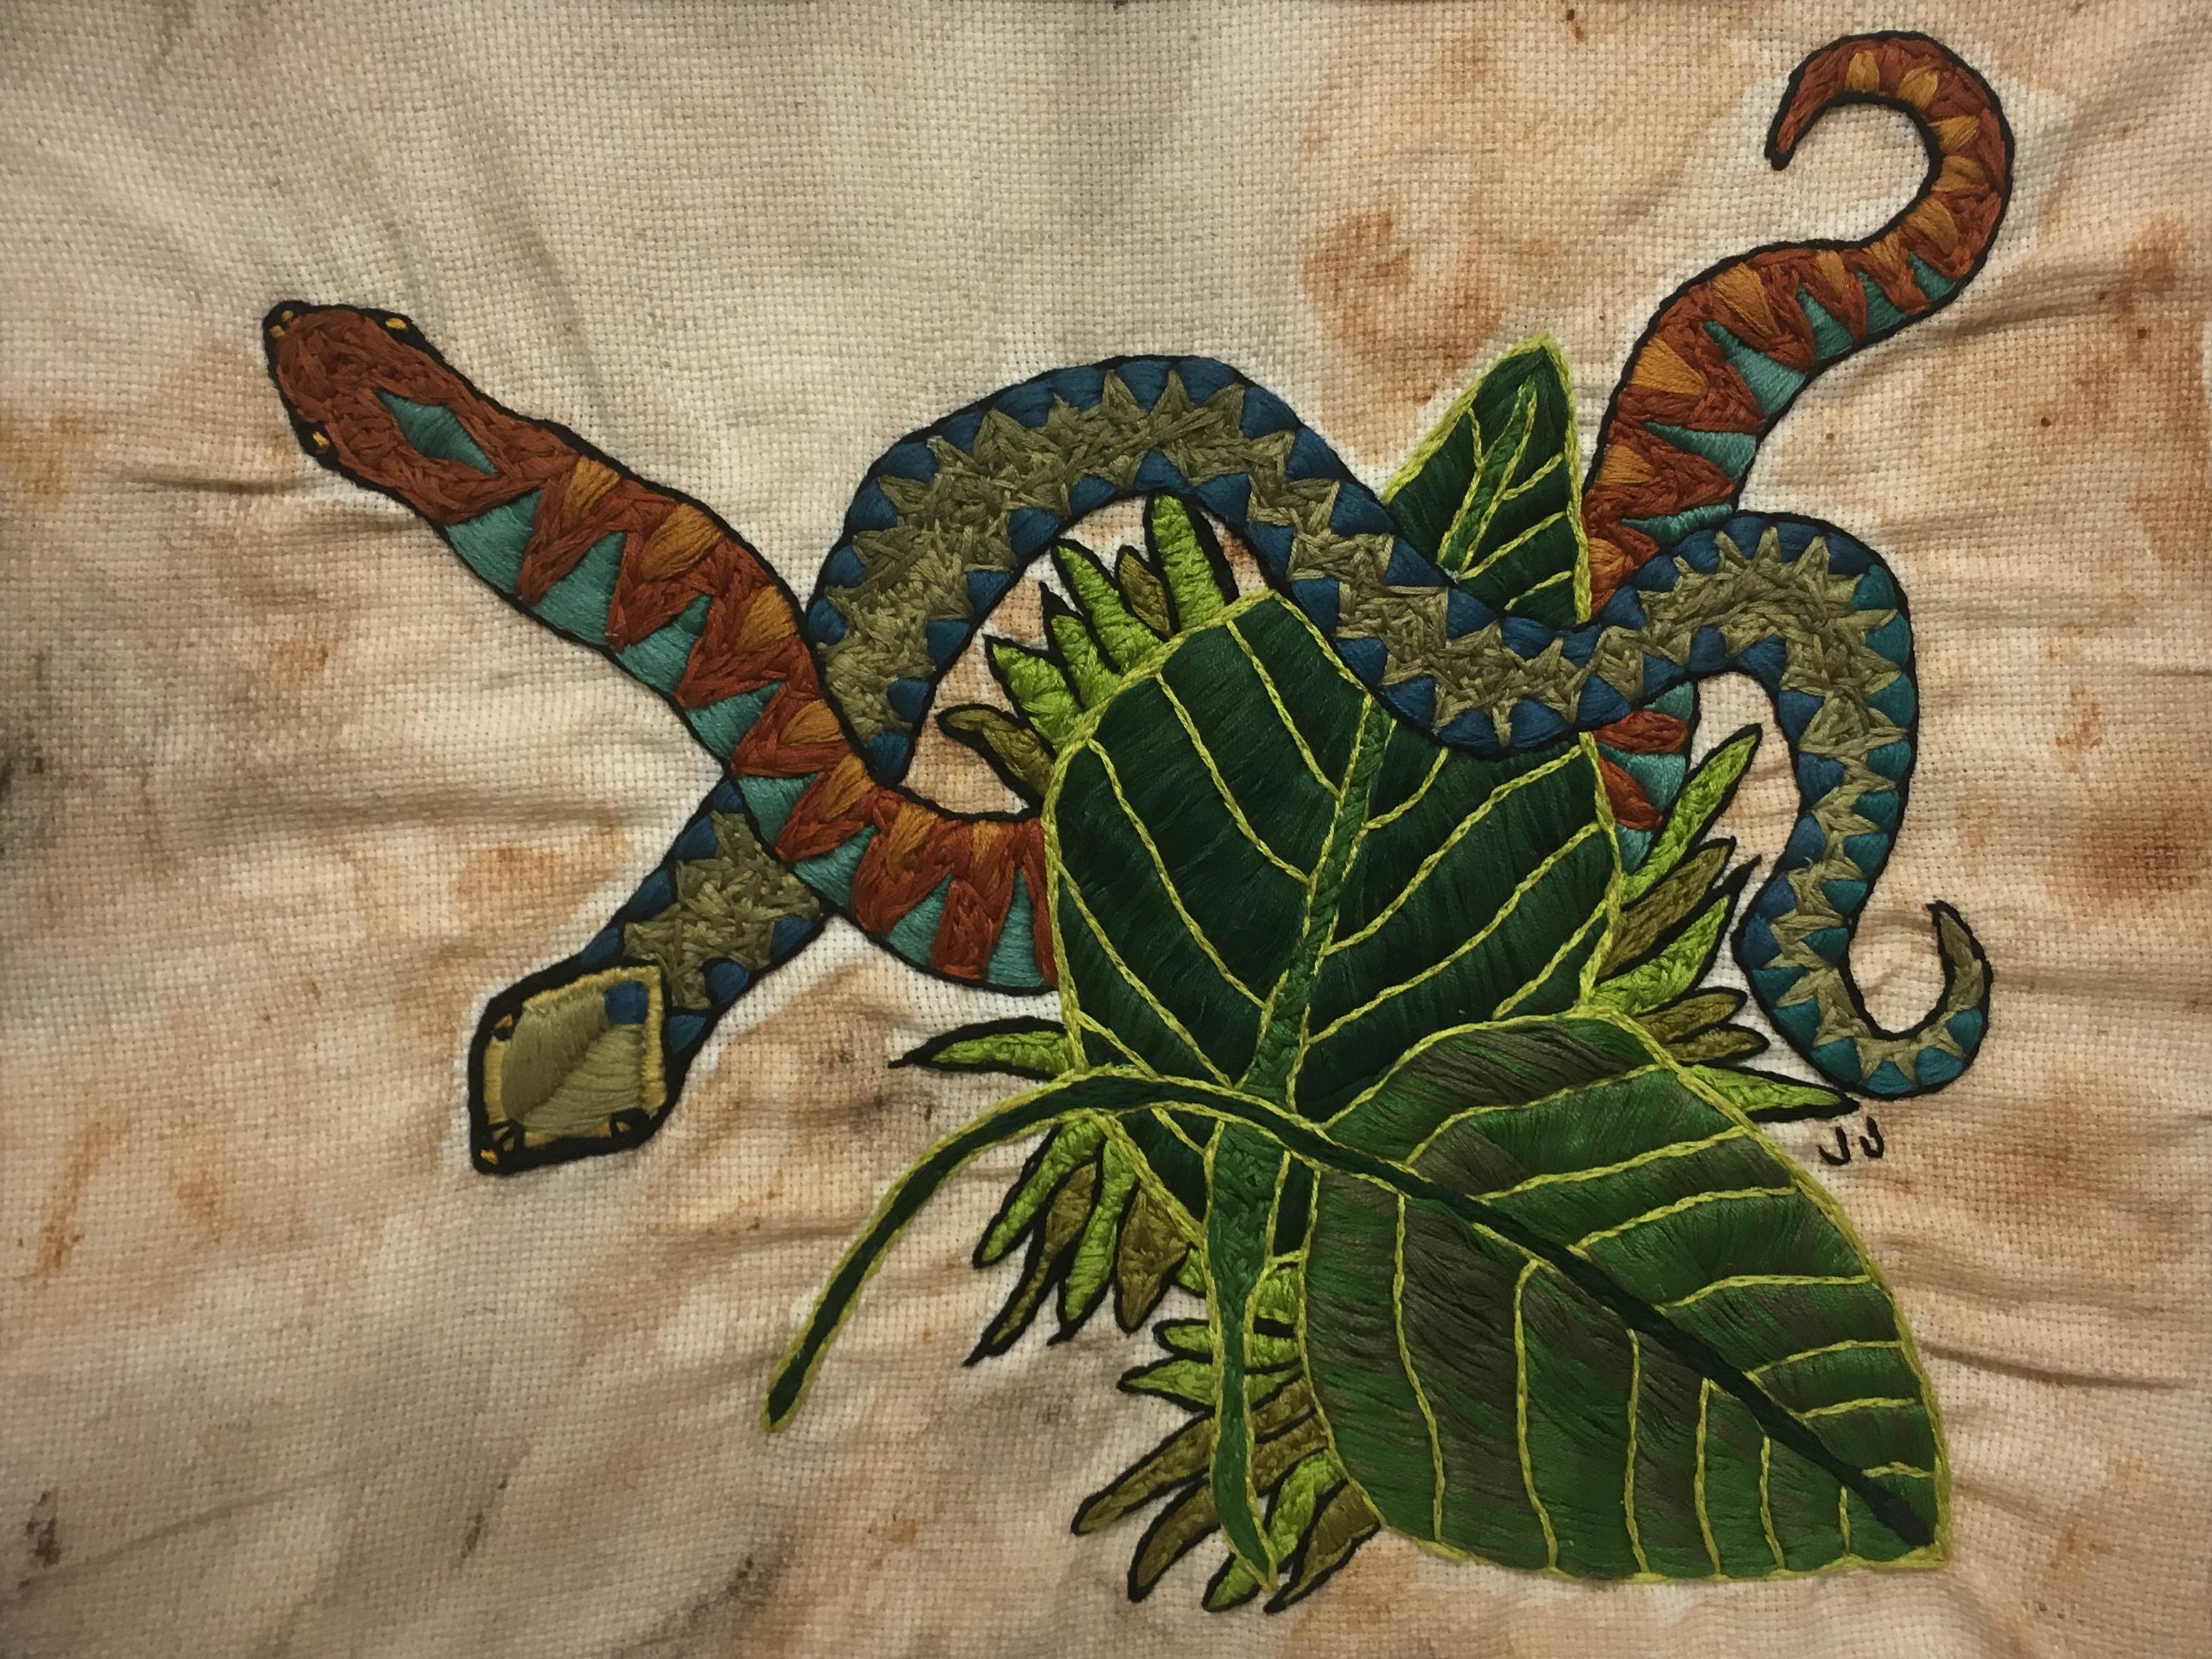 Veiled Knots , 2019, embroidery & fabric dye on canvas, snakes, leaf, earth tone